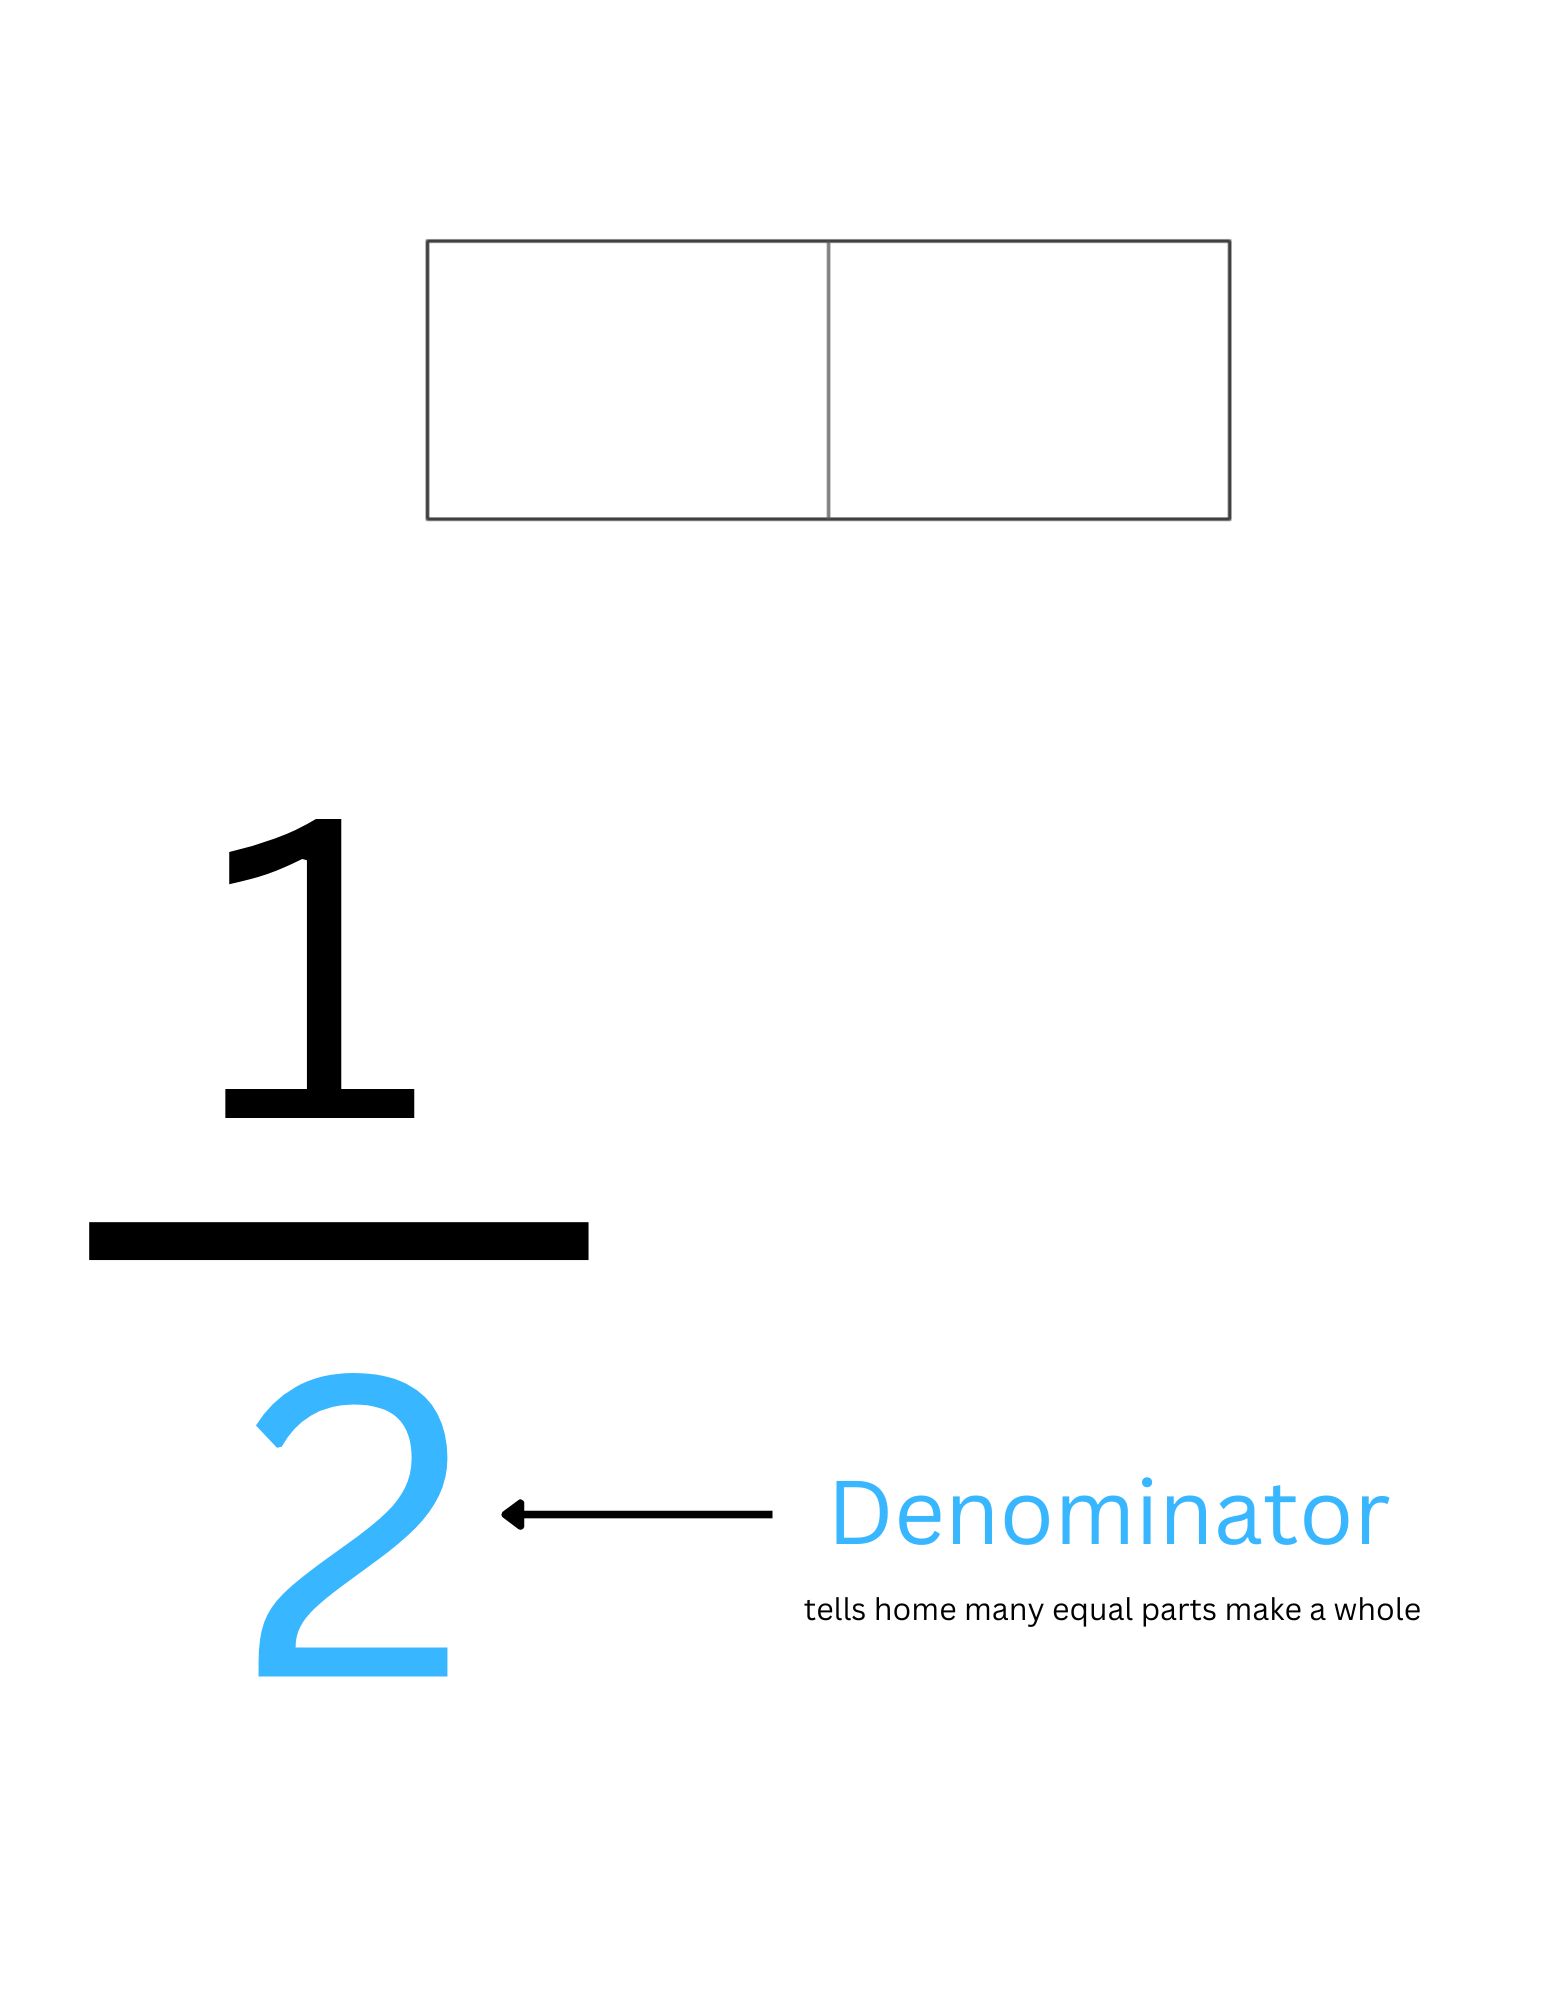 What is a Denominator?